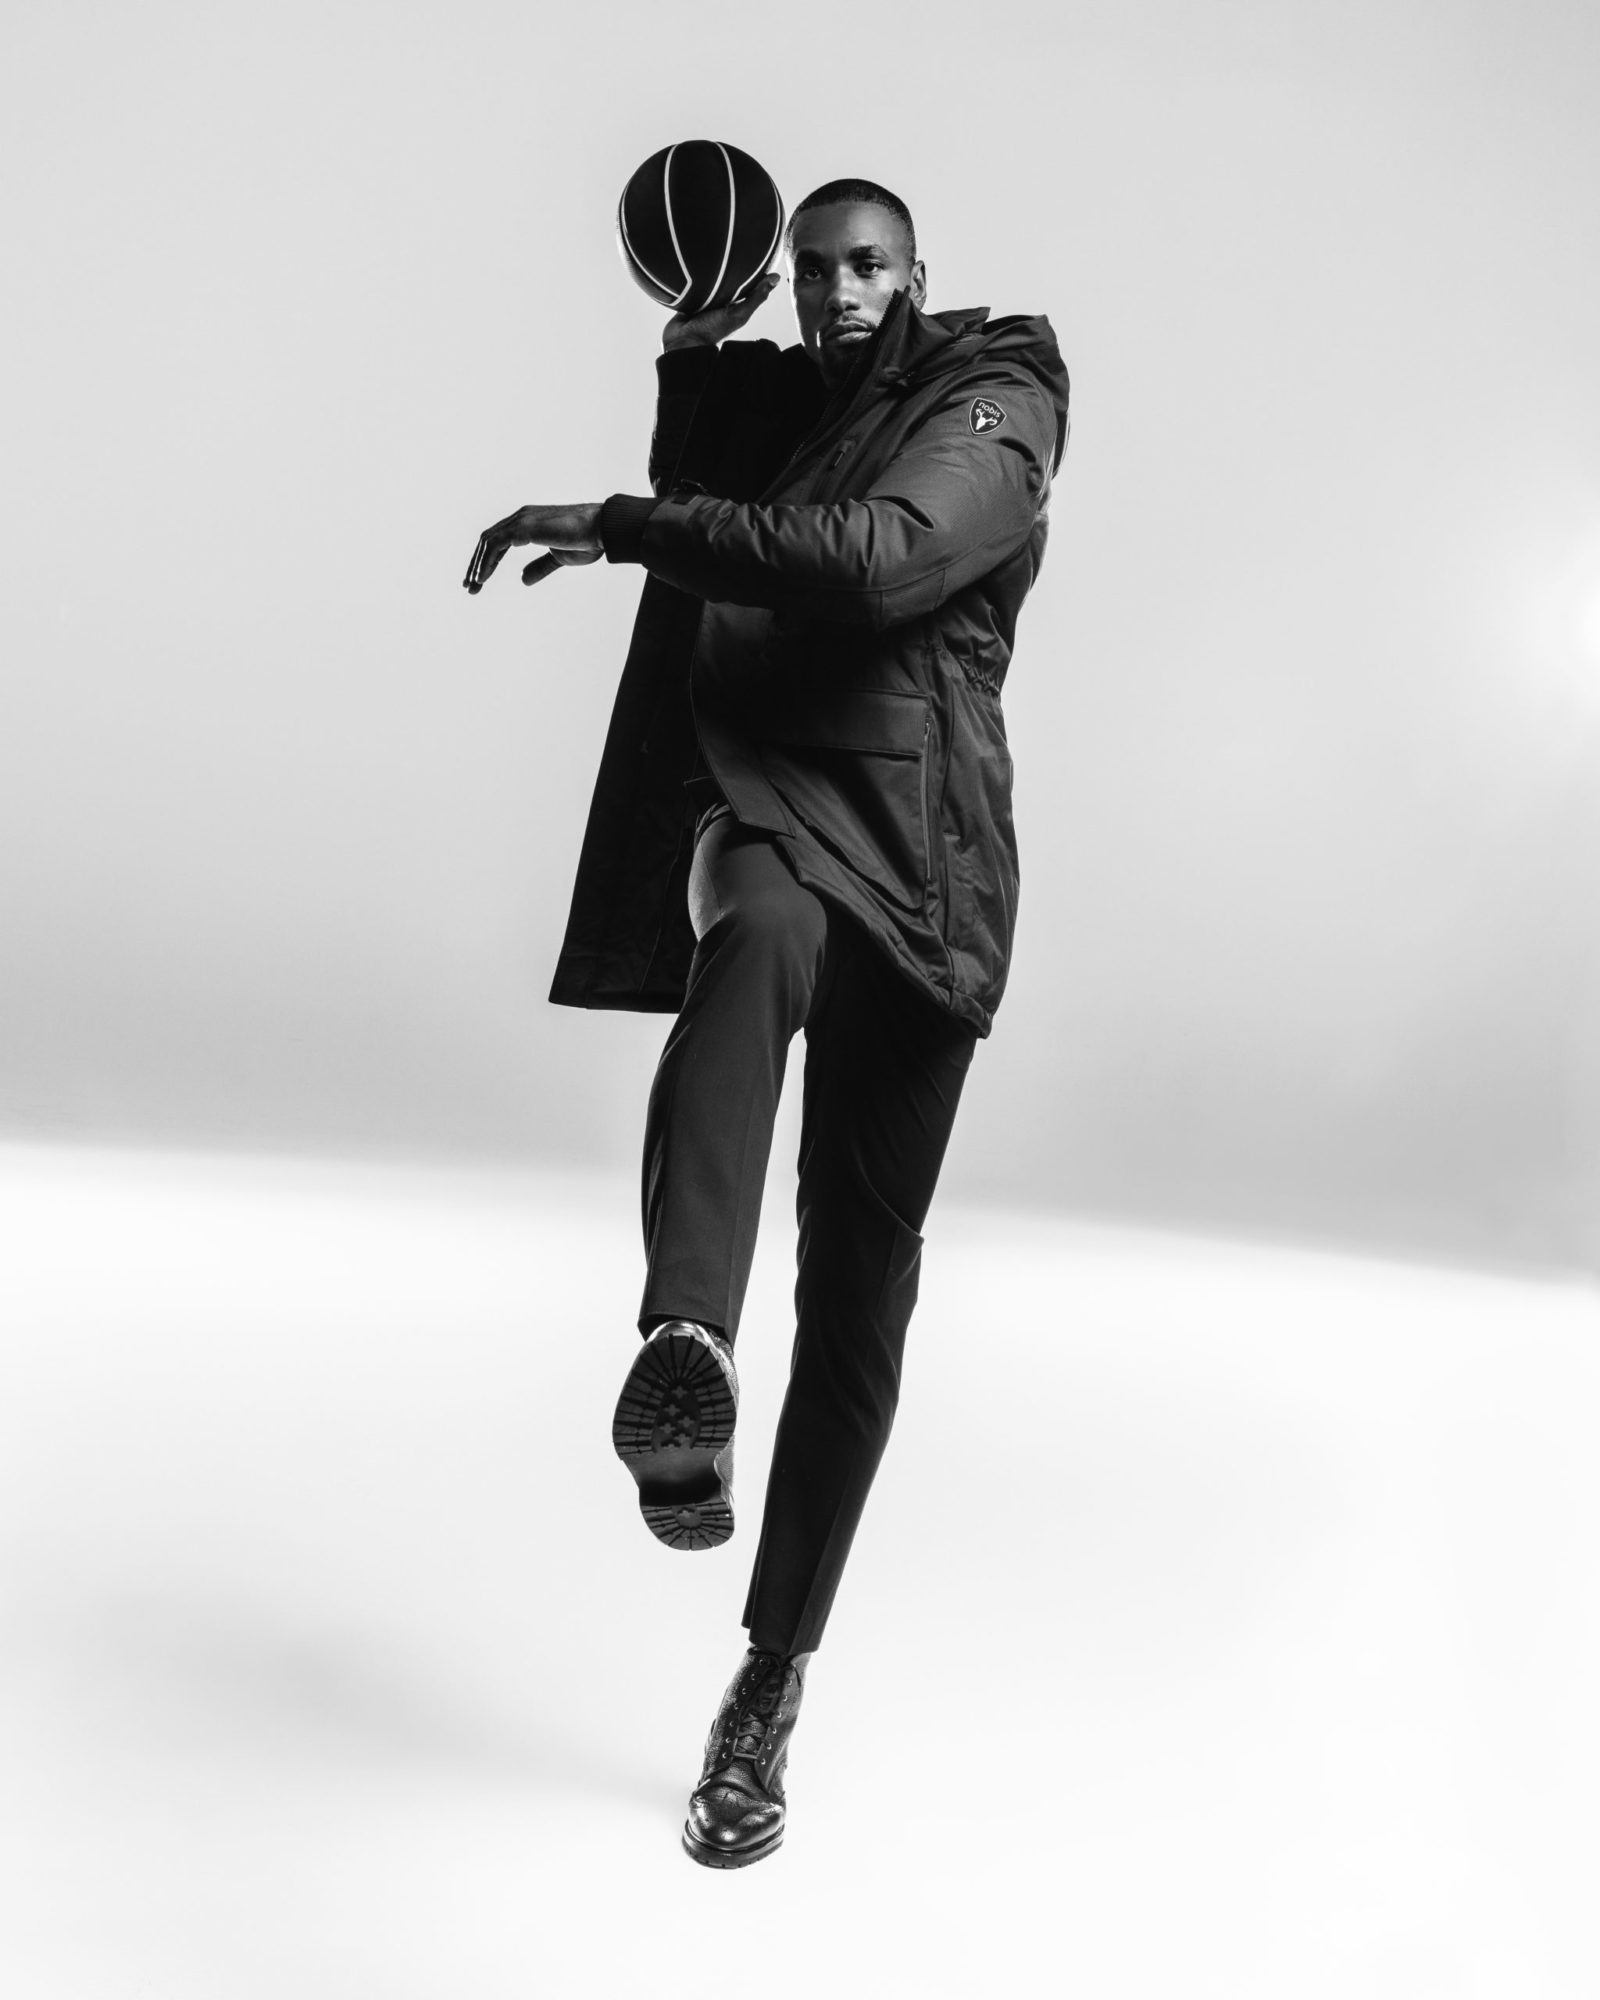 Serge Ibaka in Candian Outerwear Brand